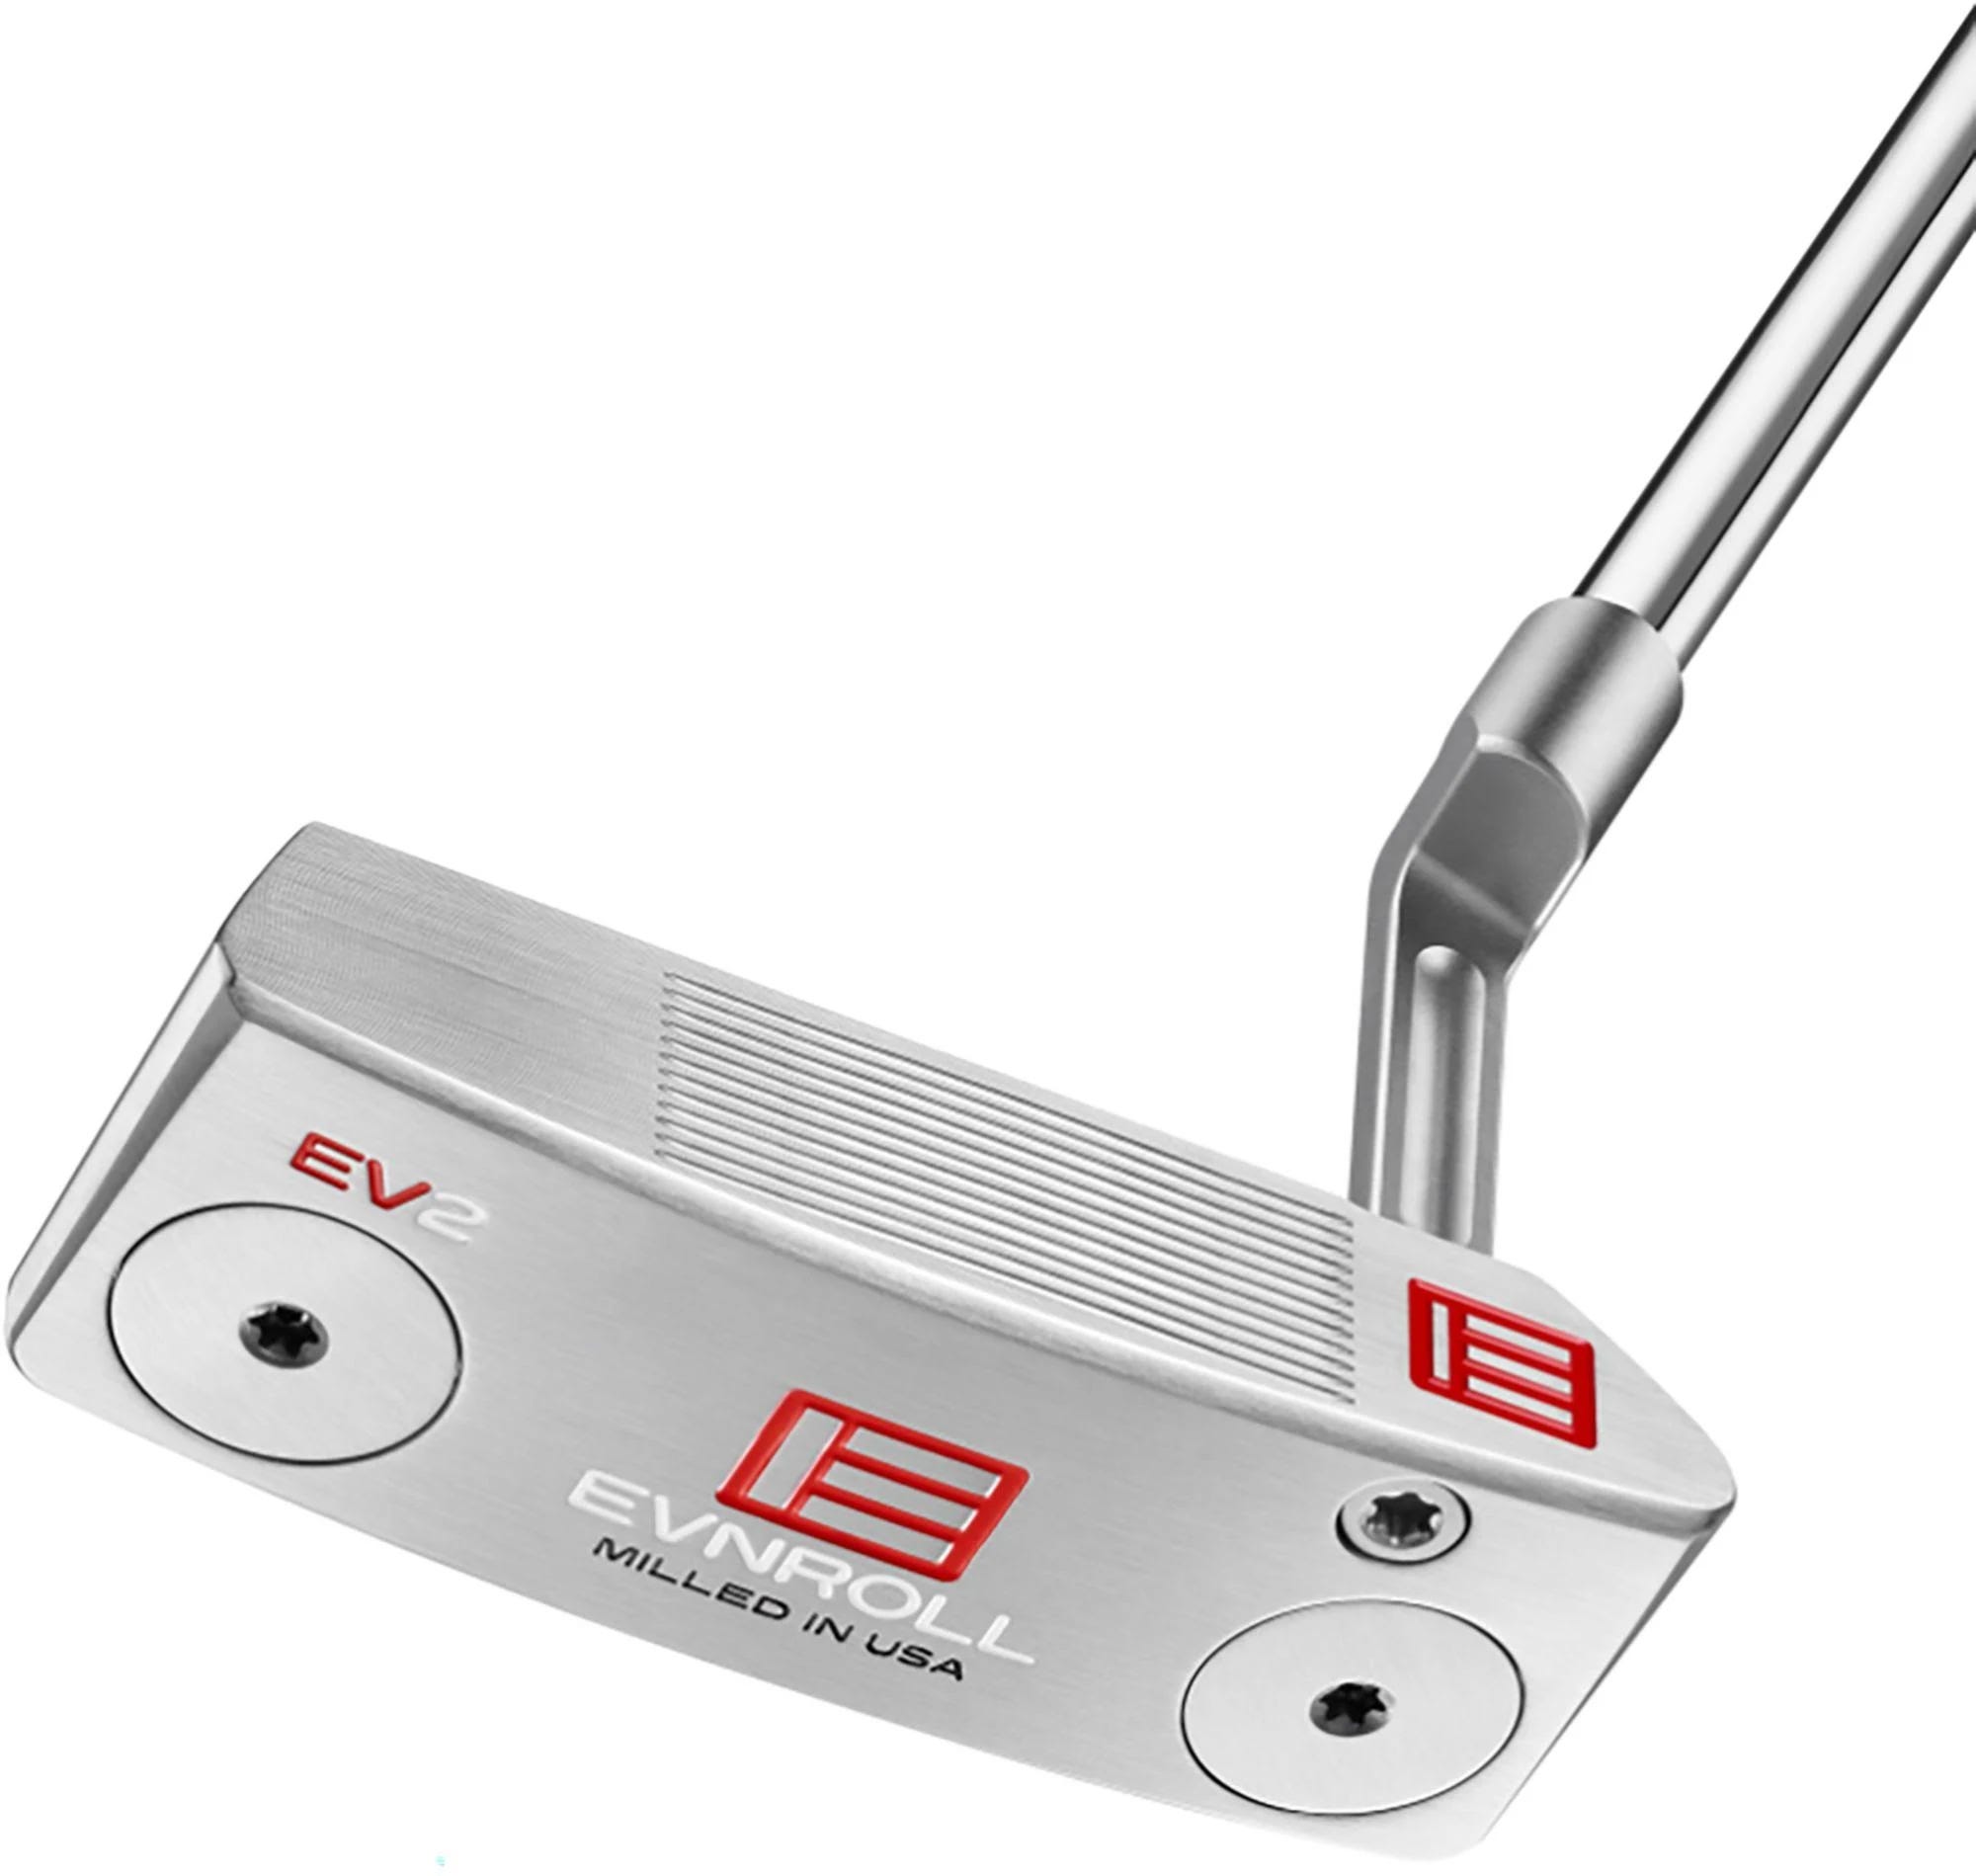 Evnroll EV2 MidBlade Putter: Premium, Low-Profile Design for Golfers | Image